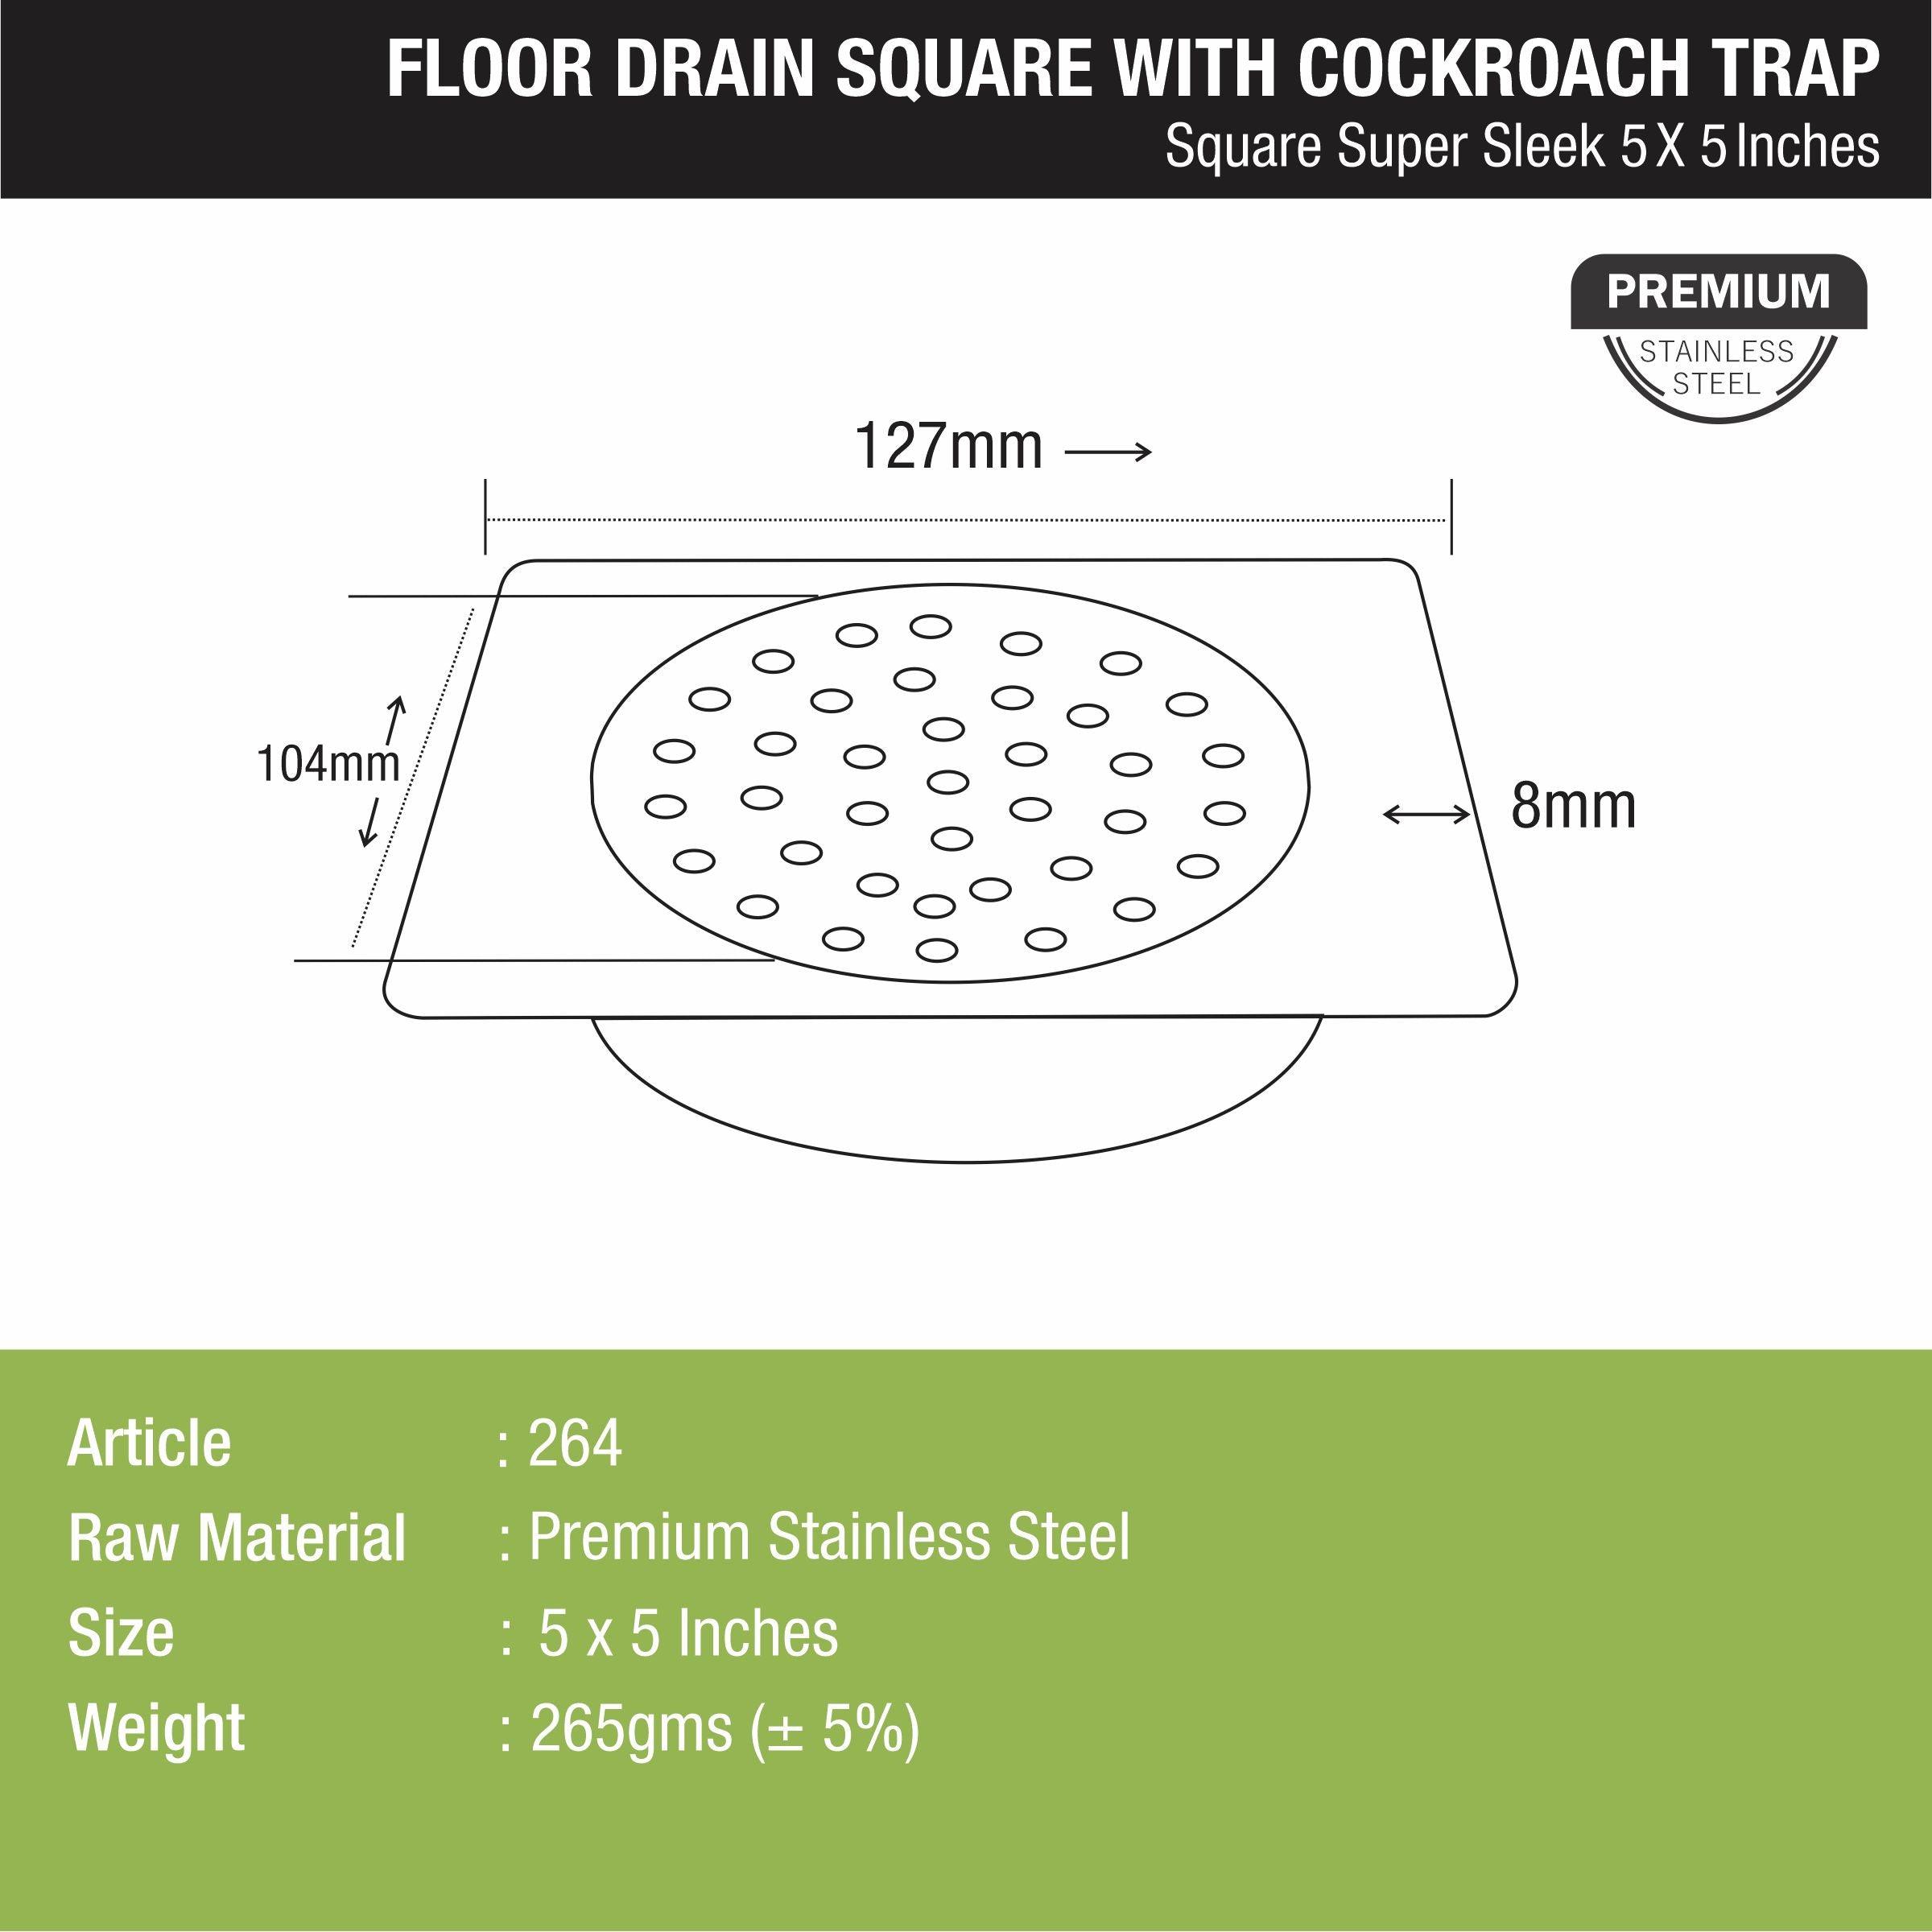 Super Sleek Square Floor Drain (5 x 5 Inches) with Cockroach Trap - LIPKA - Lipka Home